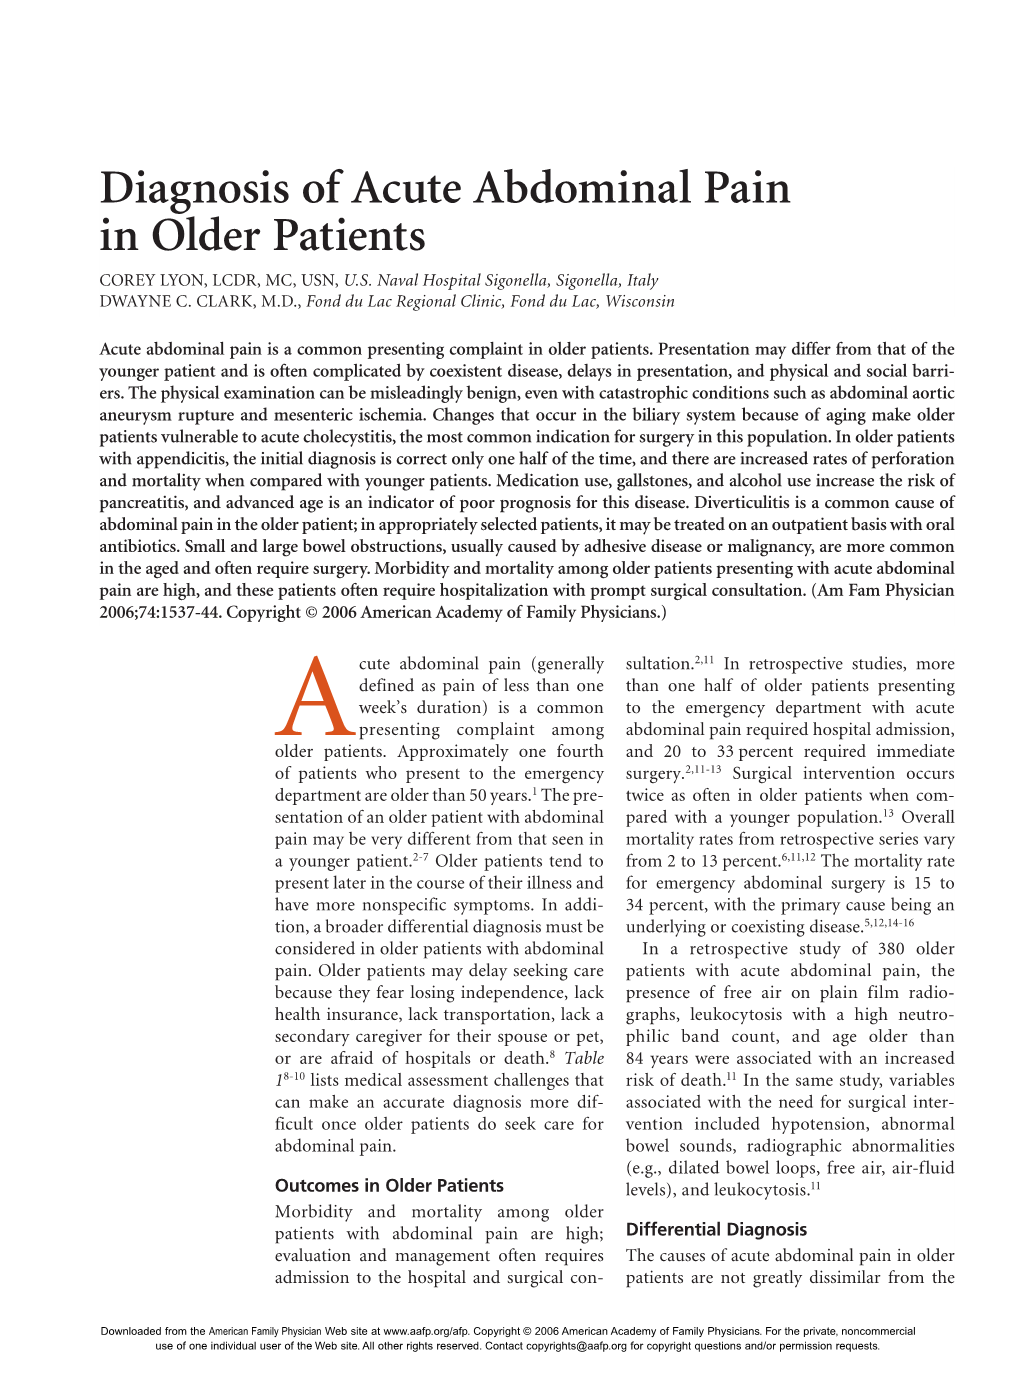 Diagnosis of Acute Abdominal Pain in Older Patients COREY LYON, LCDR, MC, USN, U.S